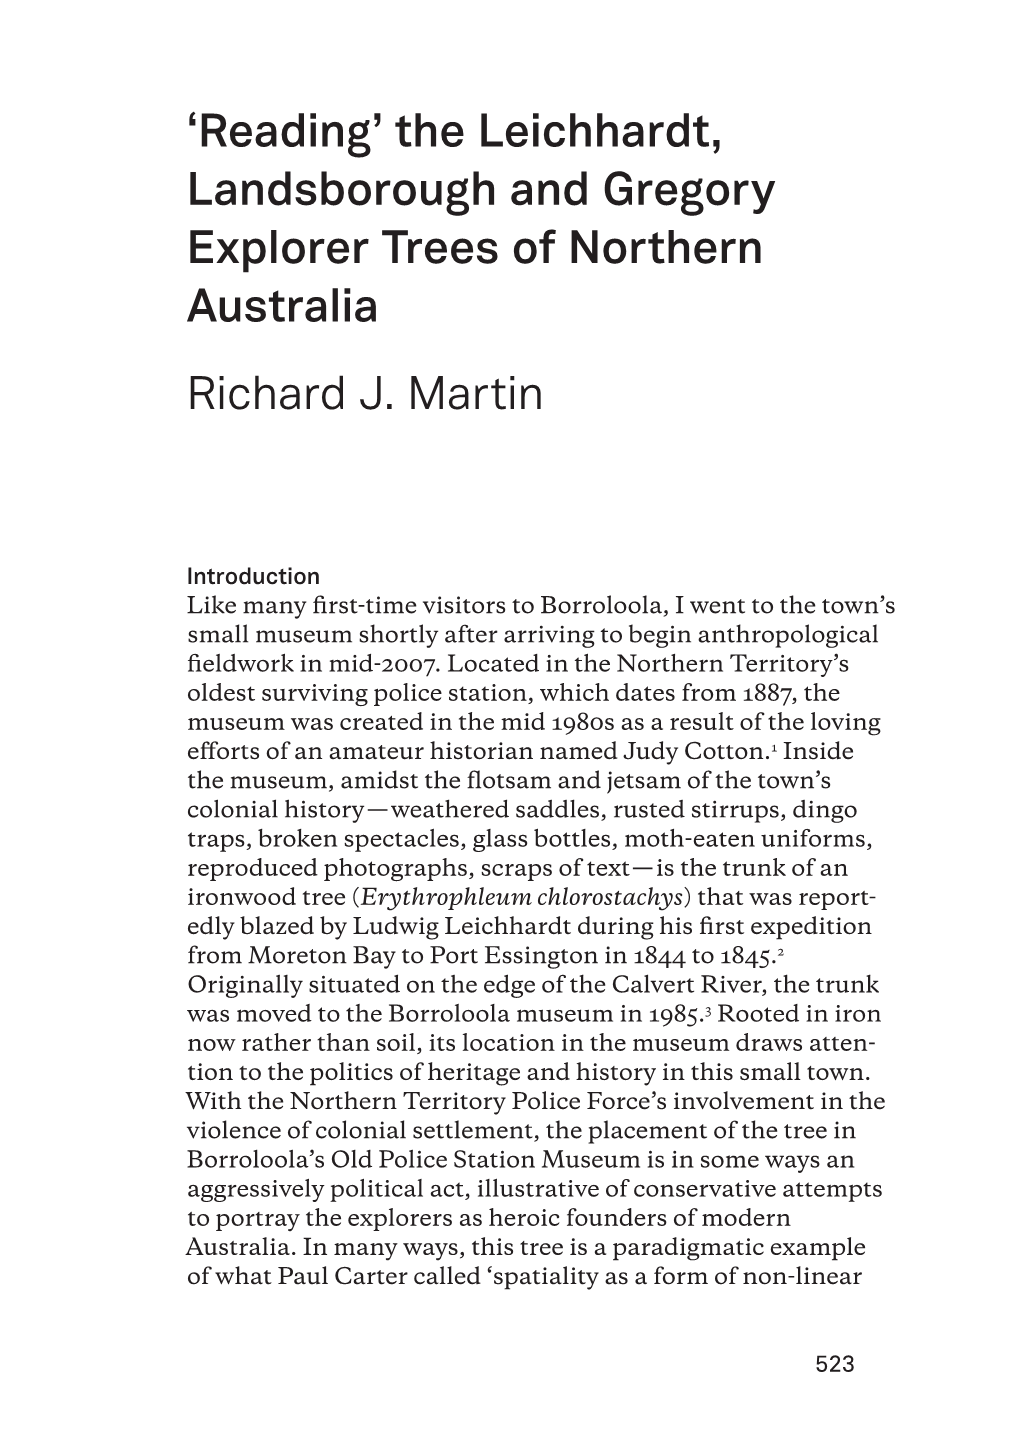 The Leichhardt, Landsborough and Gregory Explorer Trees of Northern Australia Richard J